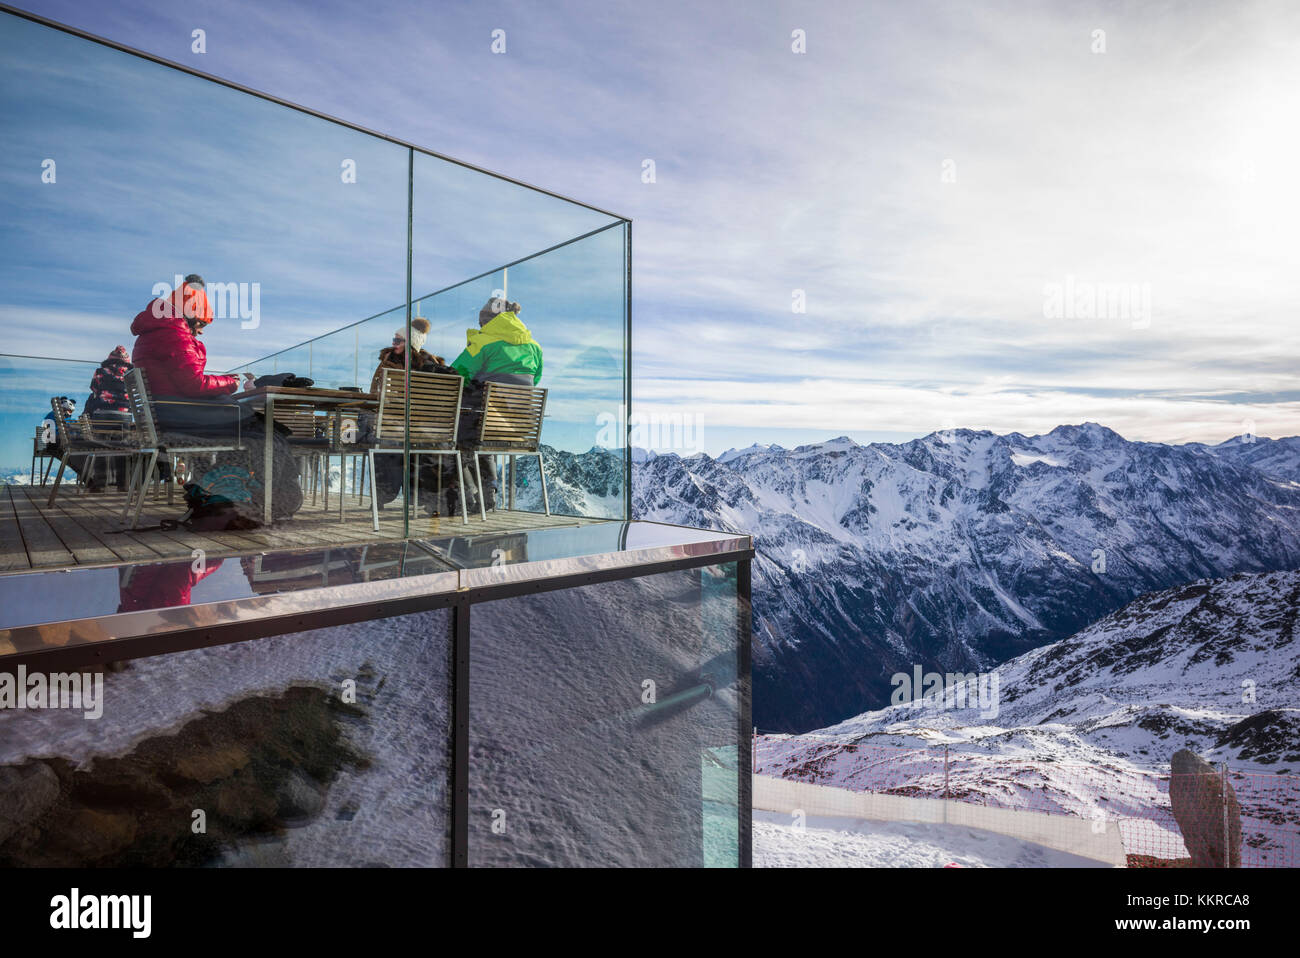 Austria, Tyrol, Otztal, Solden, Gaislachkogl ski mountain, Gaislachkogl Summit, elevation 3058 meters, Ice Q gourmet restaurant, outdoor dining, winter Stock Photo